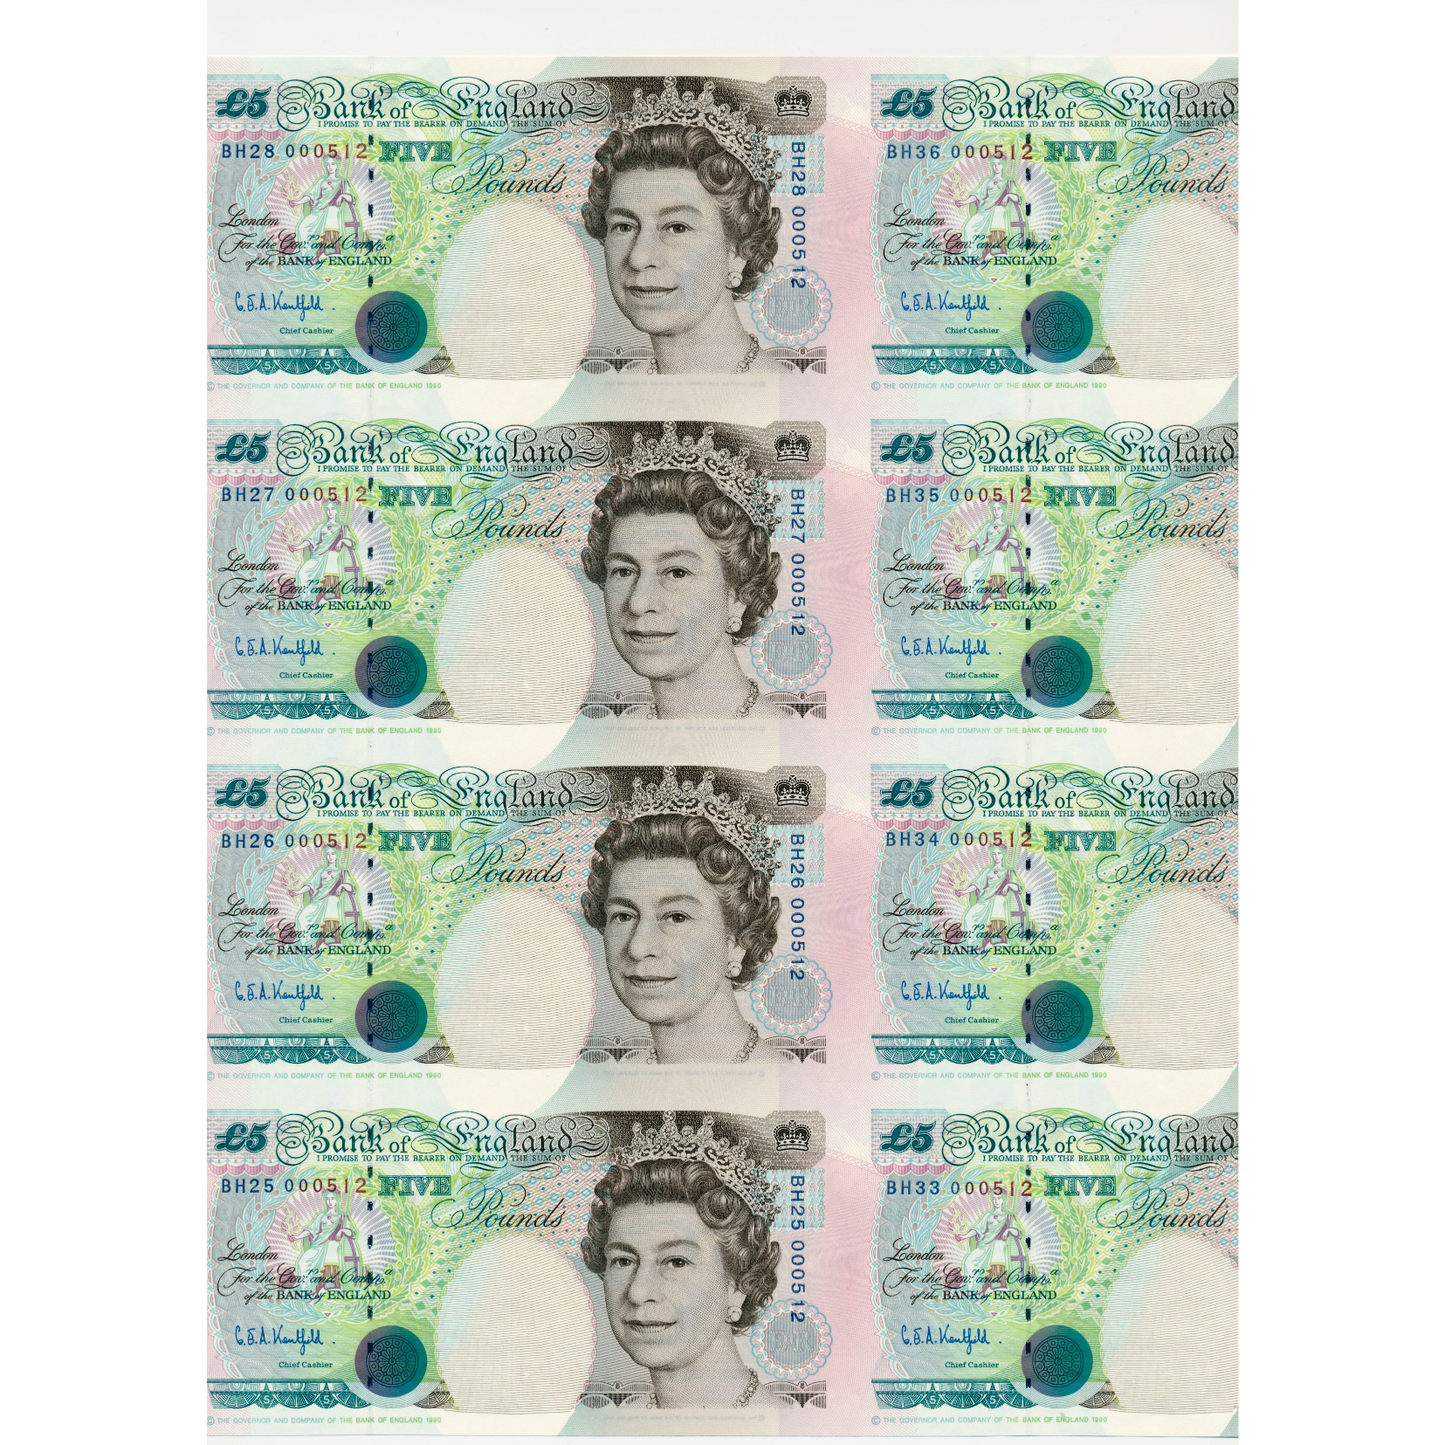 C121 1996 Debden presentation set Uncut mainsheet of 8 £5 notes B364 (BH)